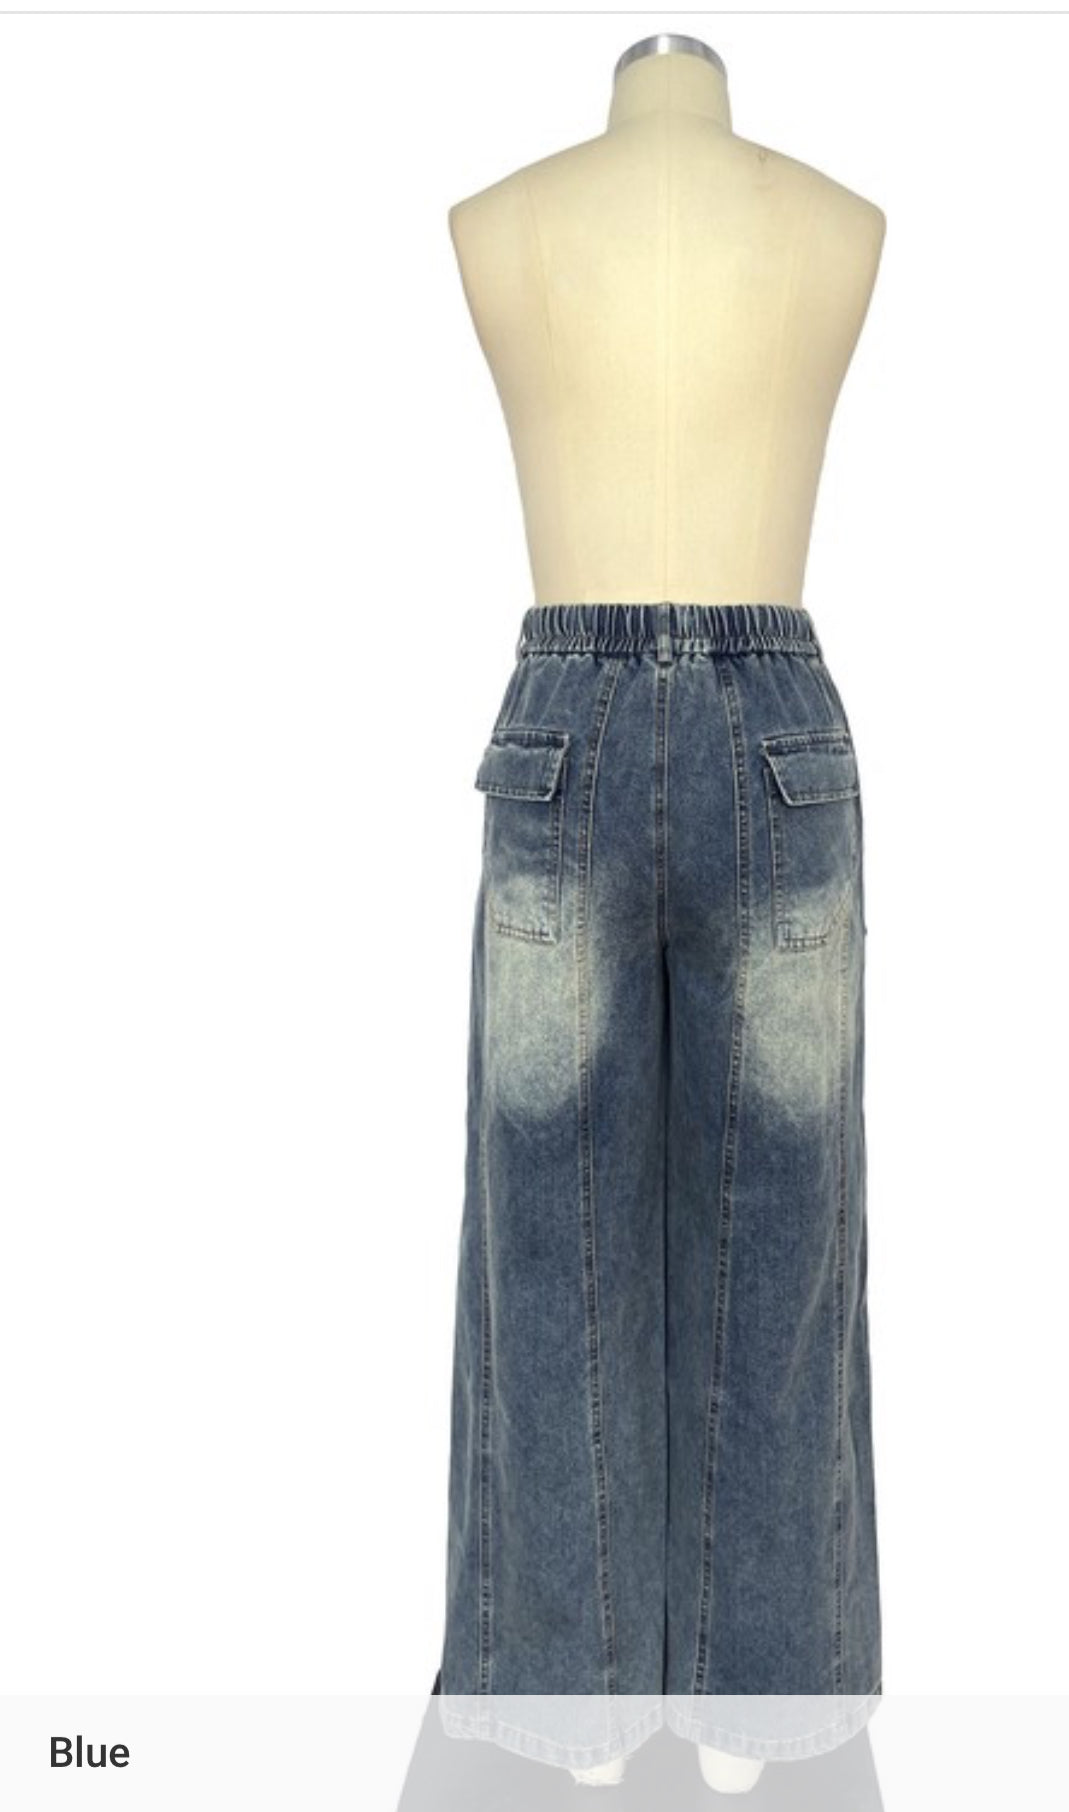 Grafffti Embellished Jeans